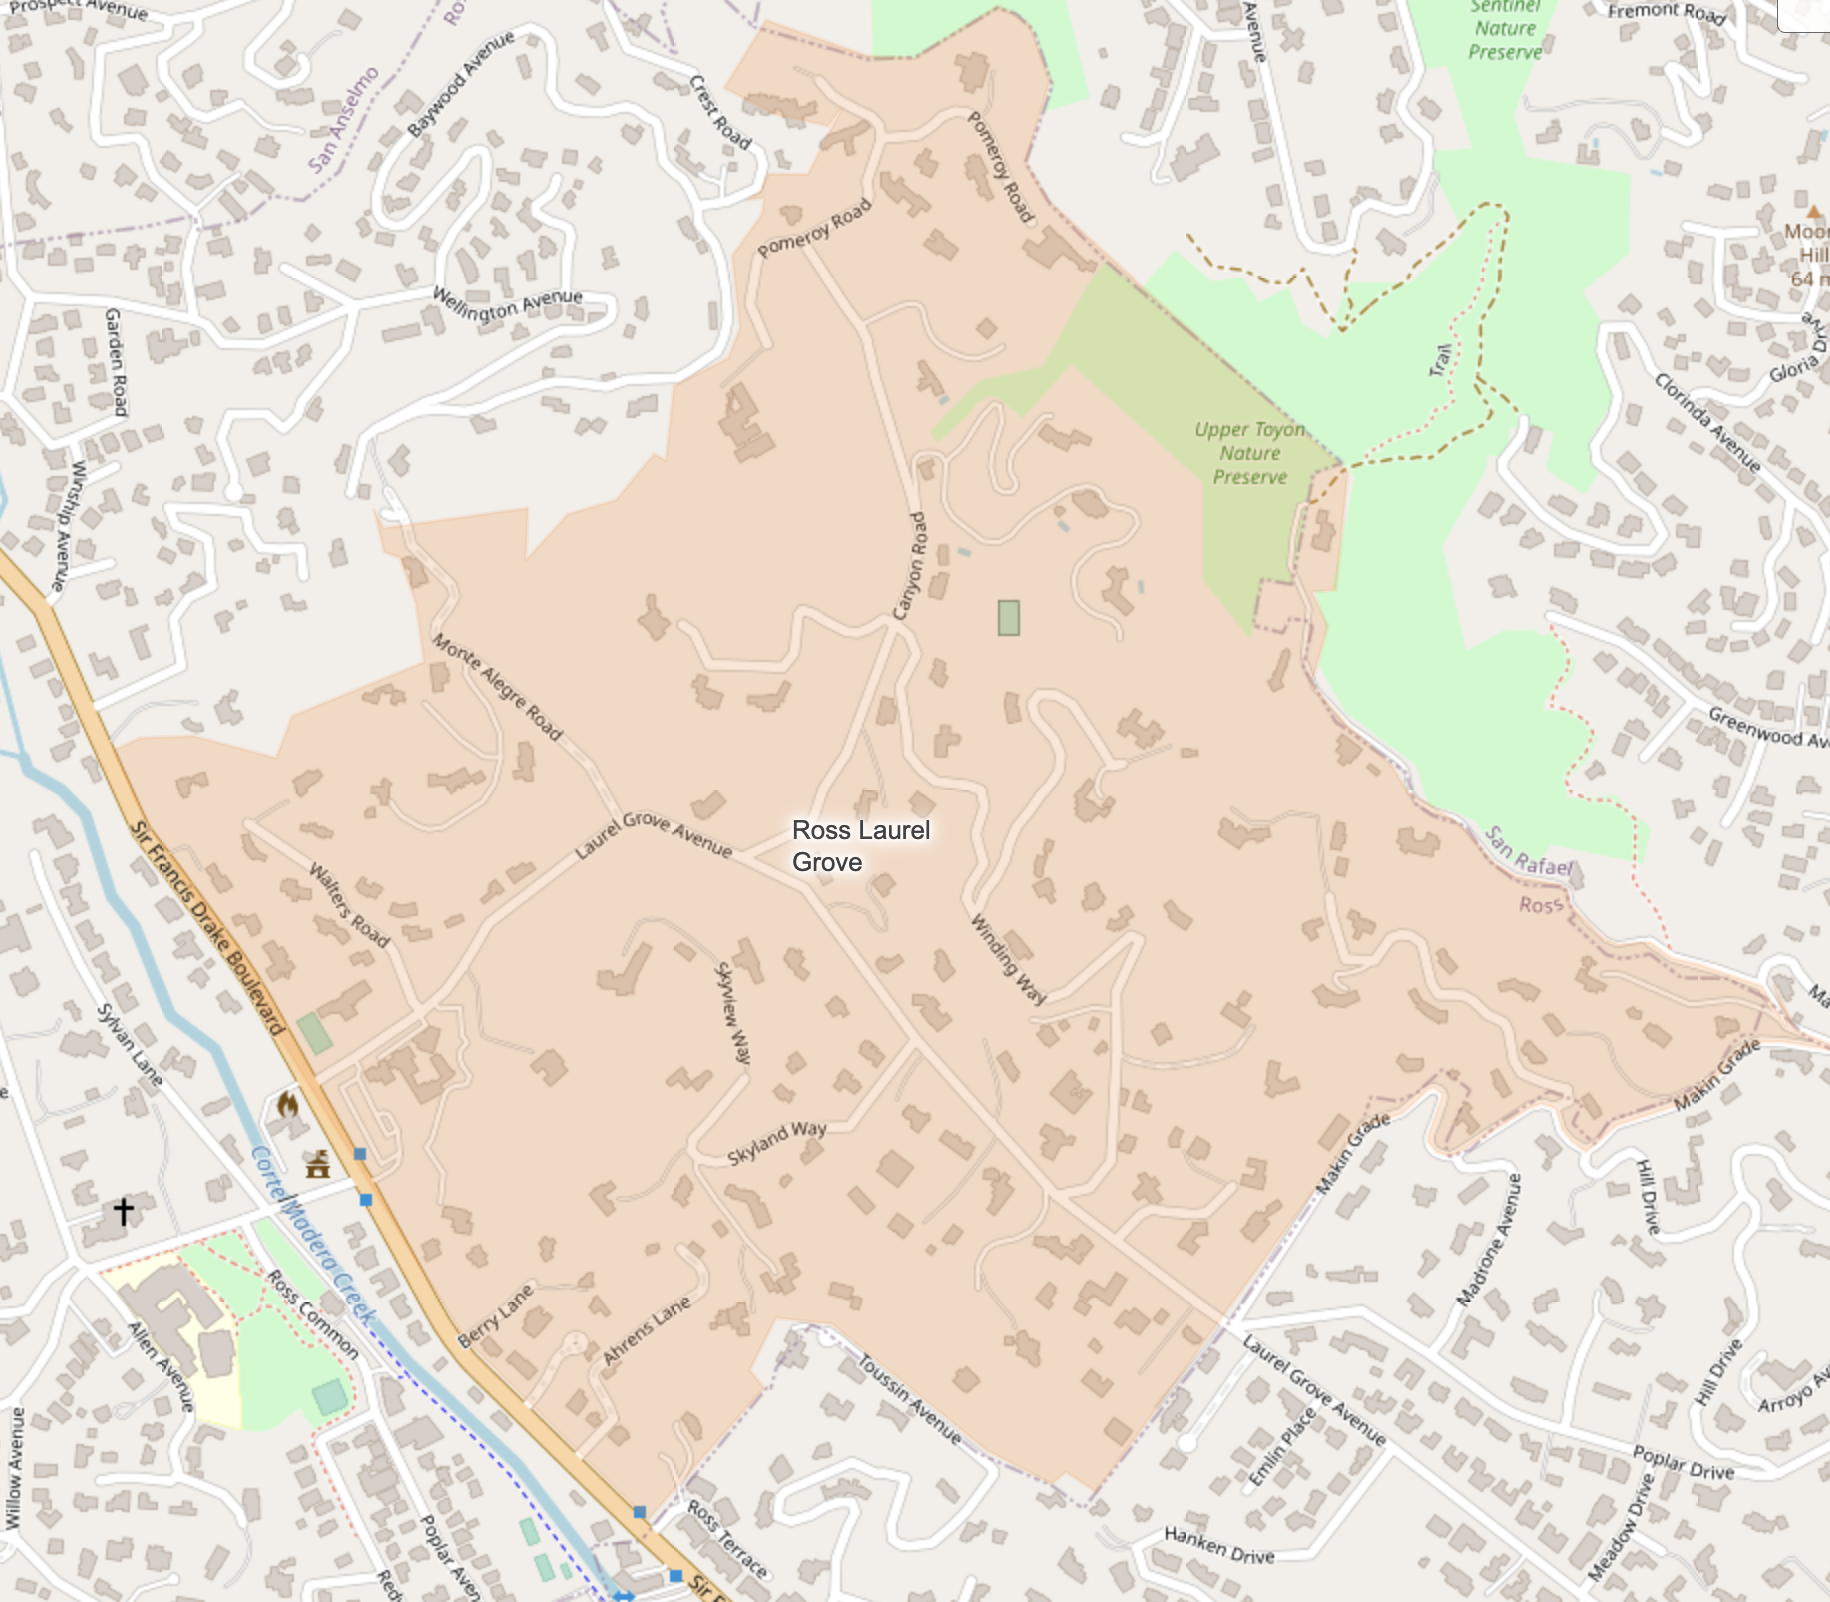 Ross Laurel Grove inspection Map